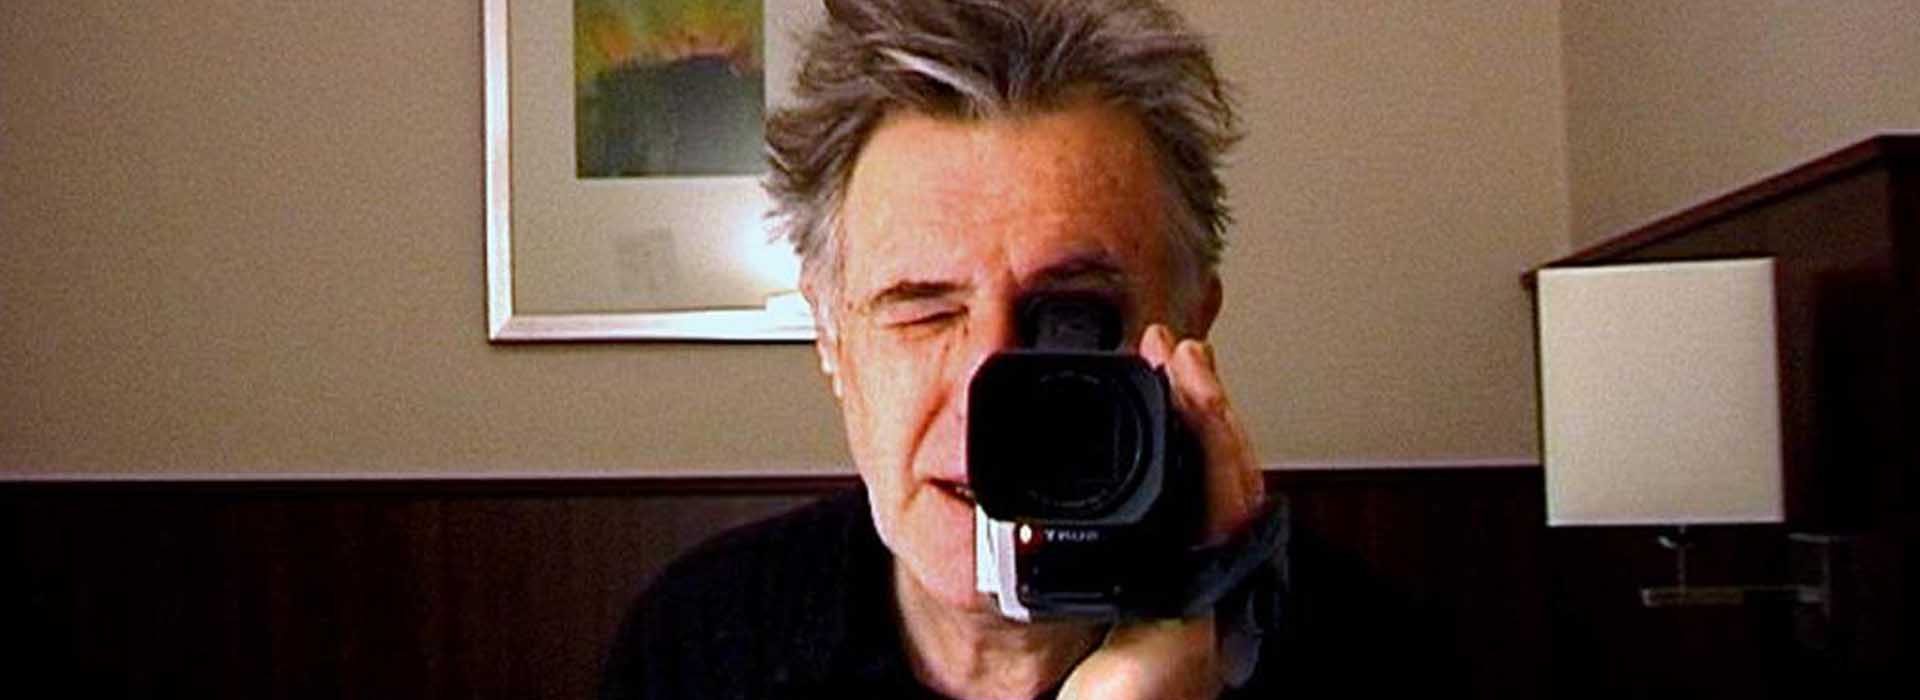 John Smith, xxperimental video creator & filmmaker